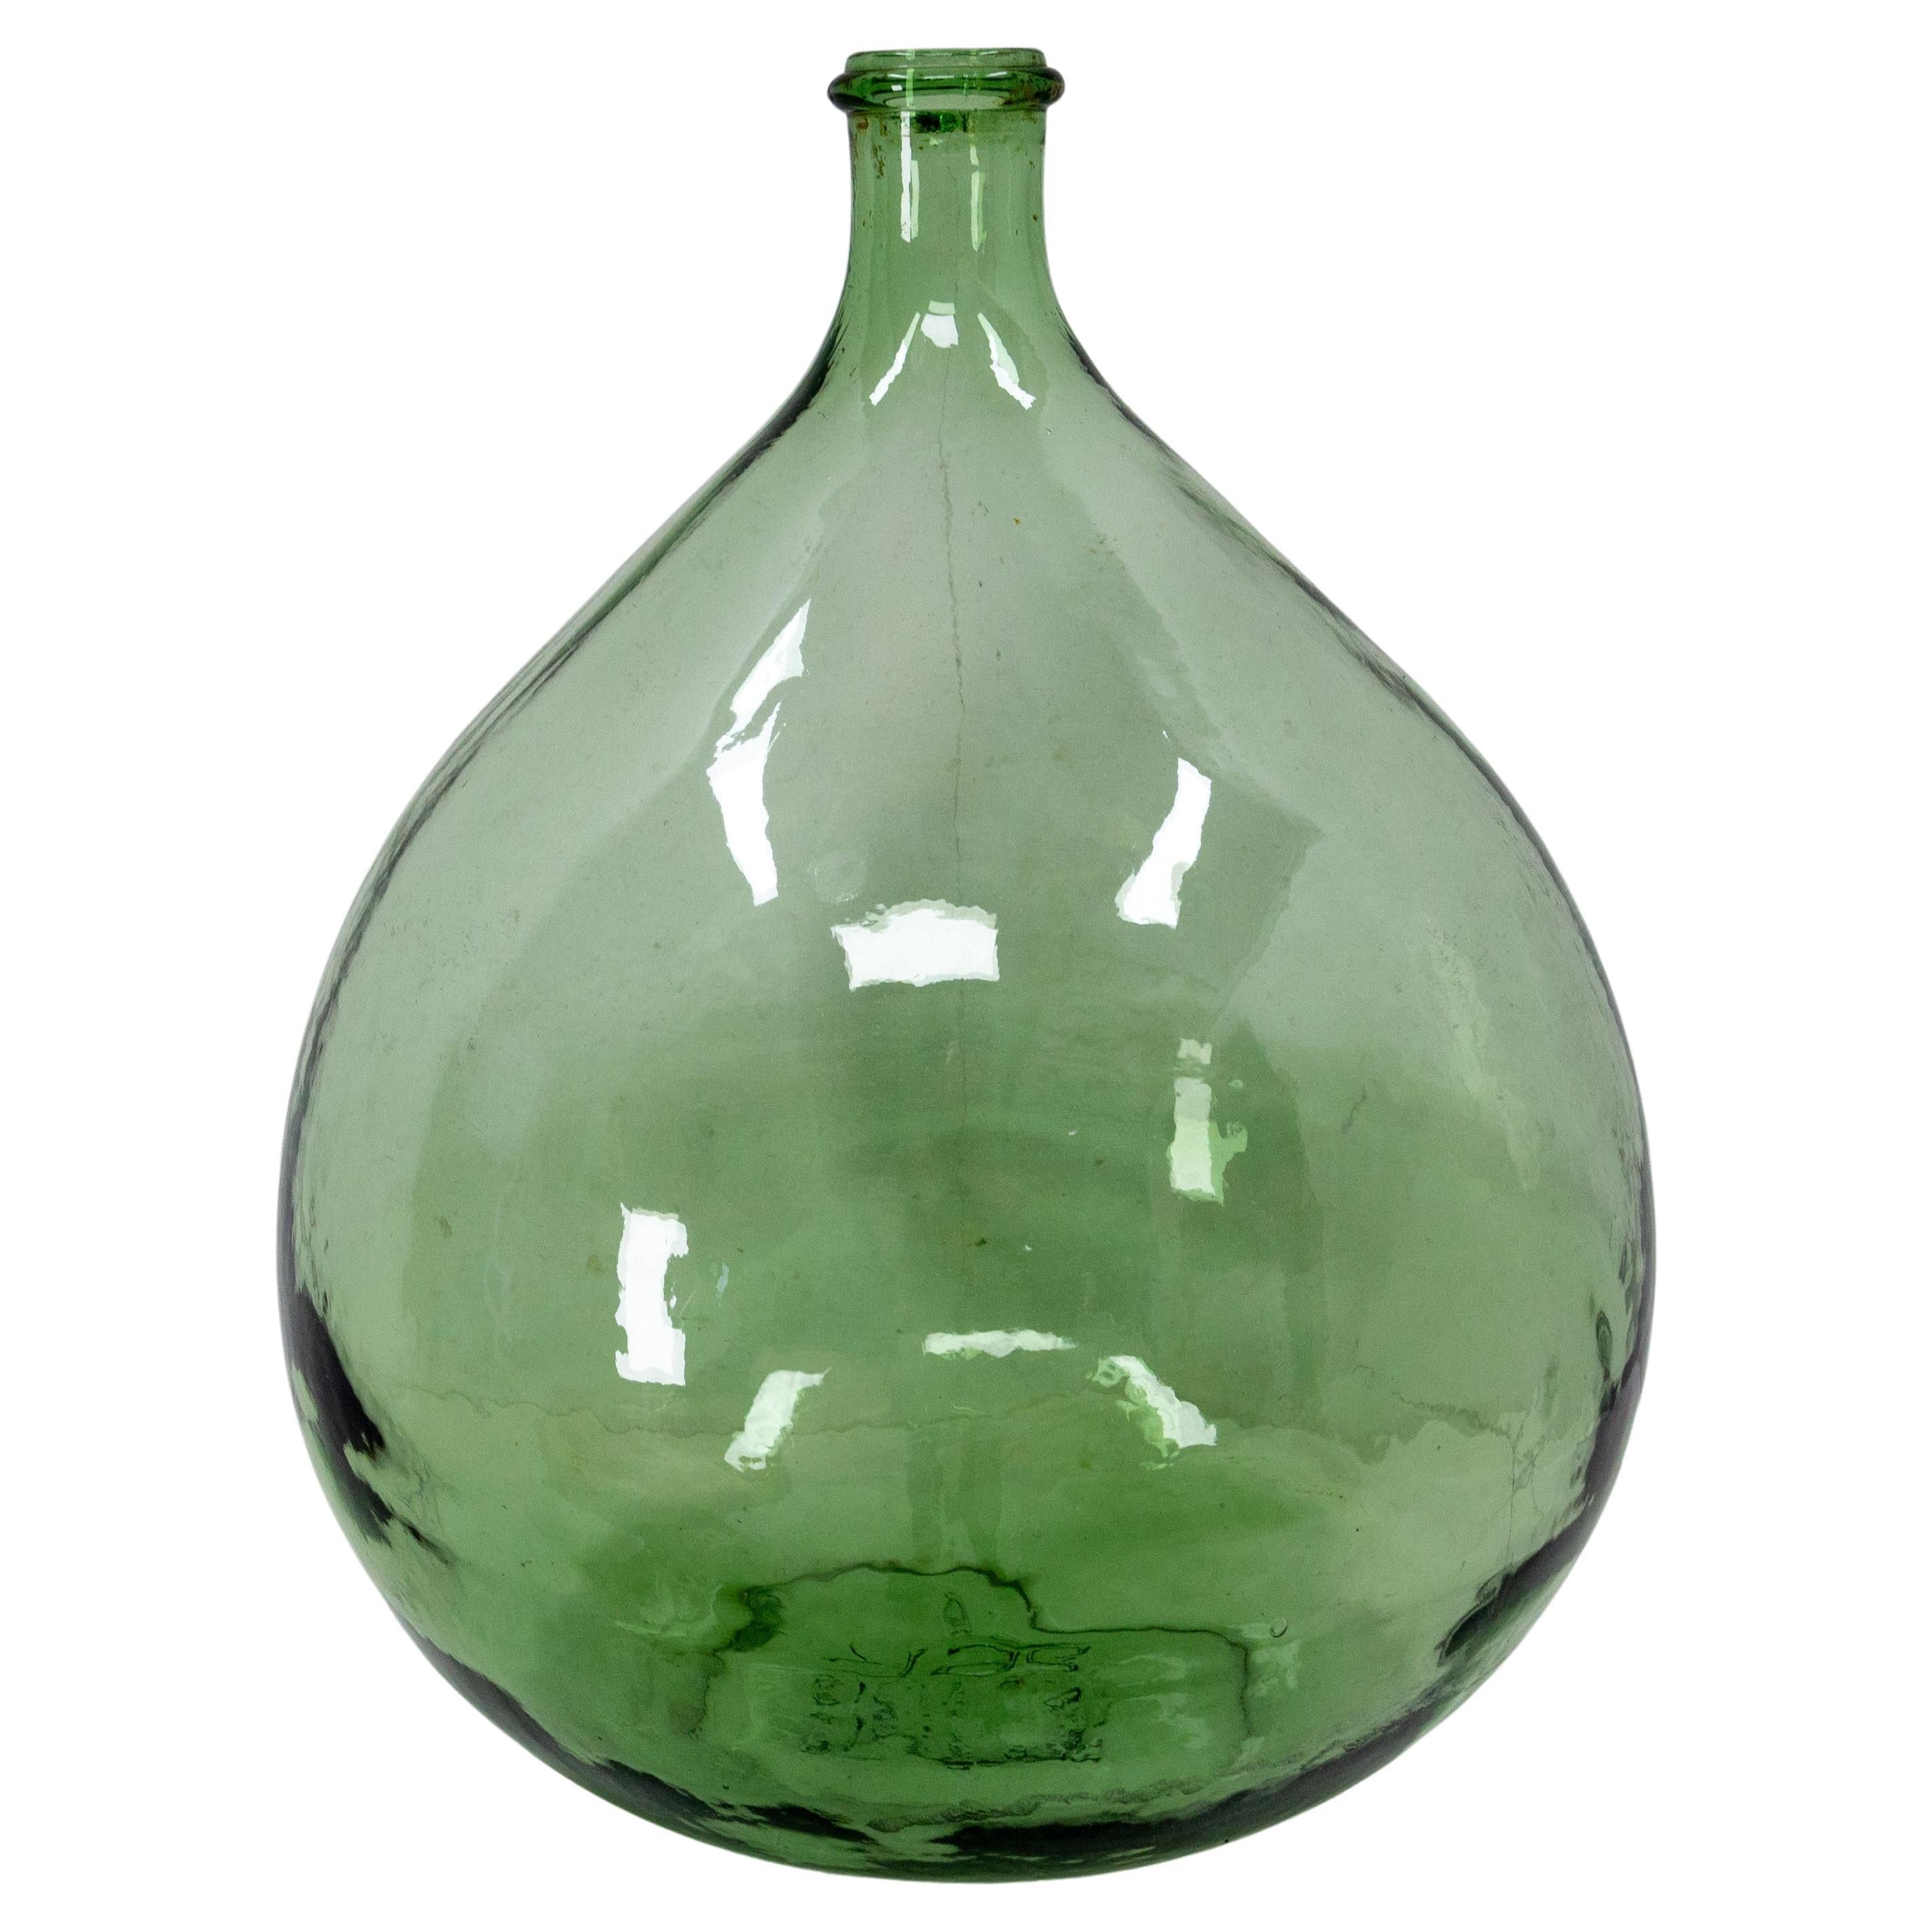 Vintage Green Glass Bottle Demijohns Lady Jeanne or Carboy